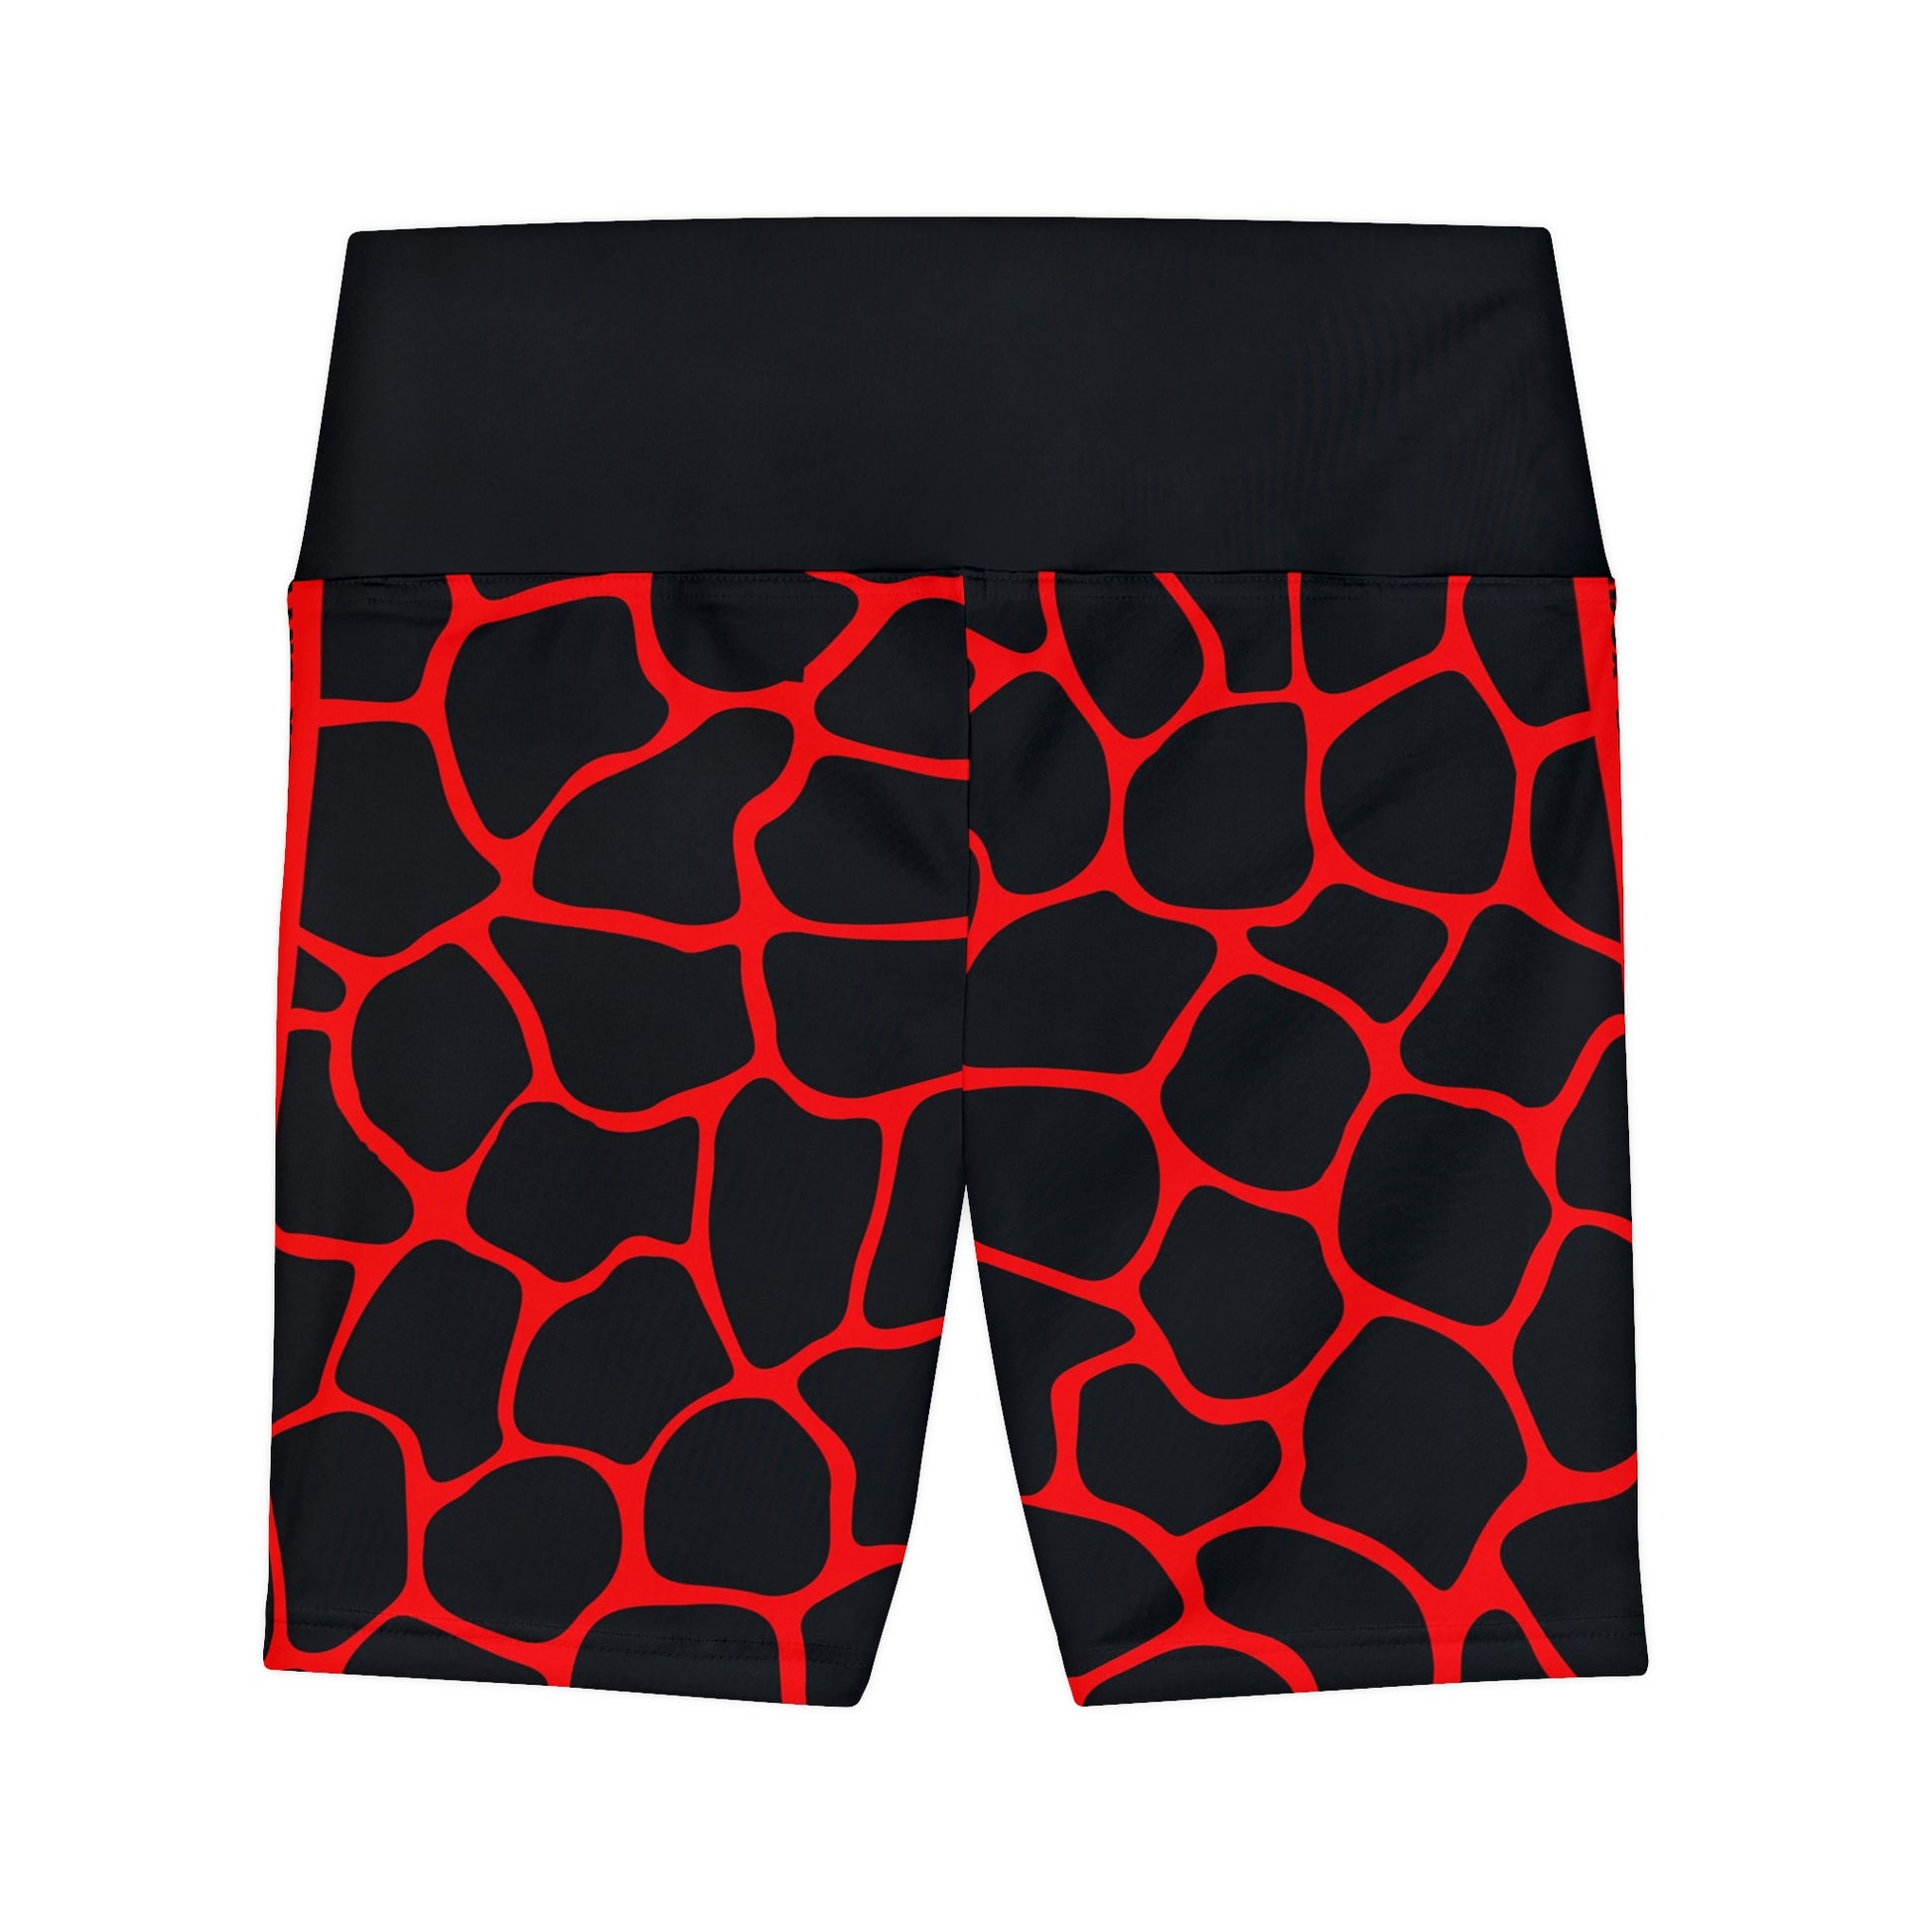 Nike Women's 3 Pro Training Shorts - Gym Red / Black / White